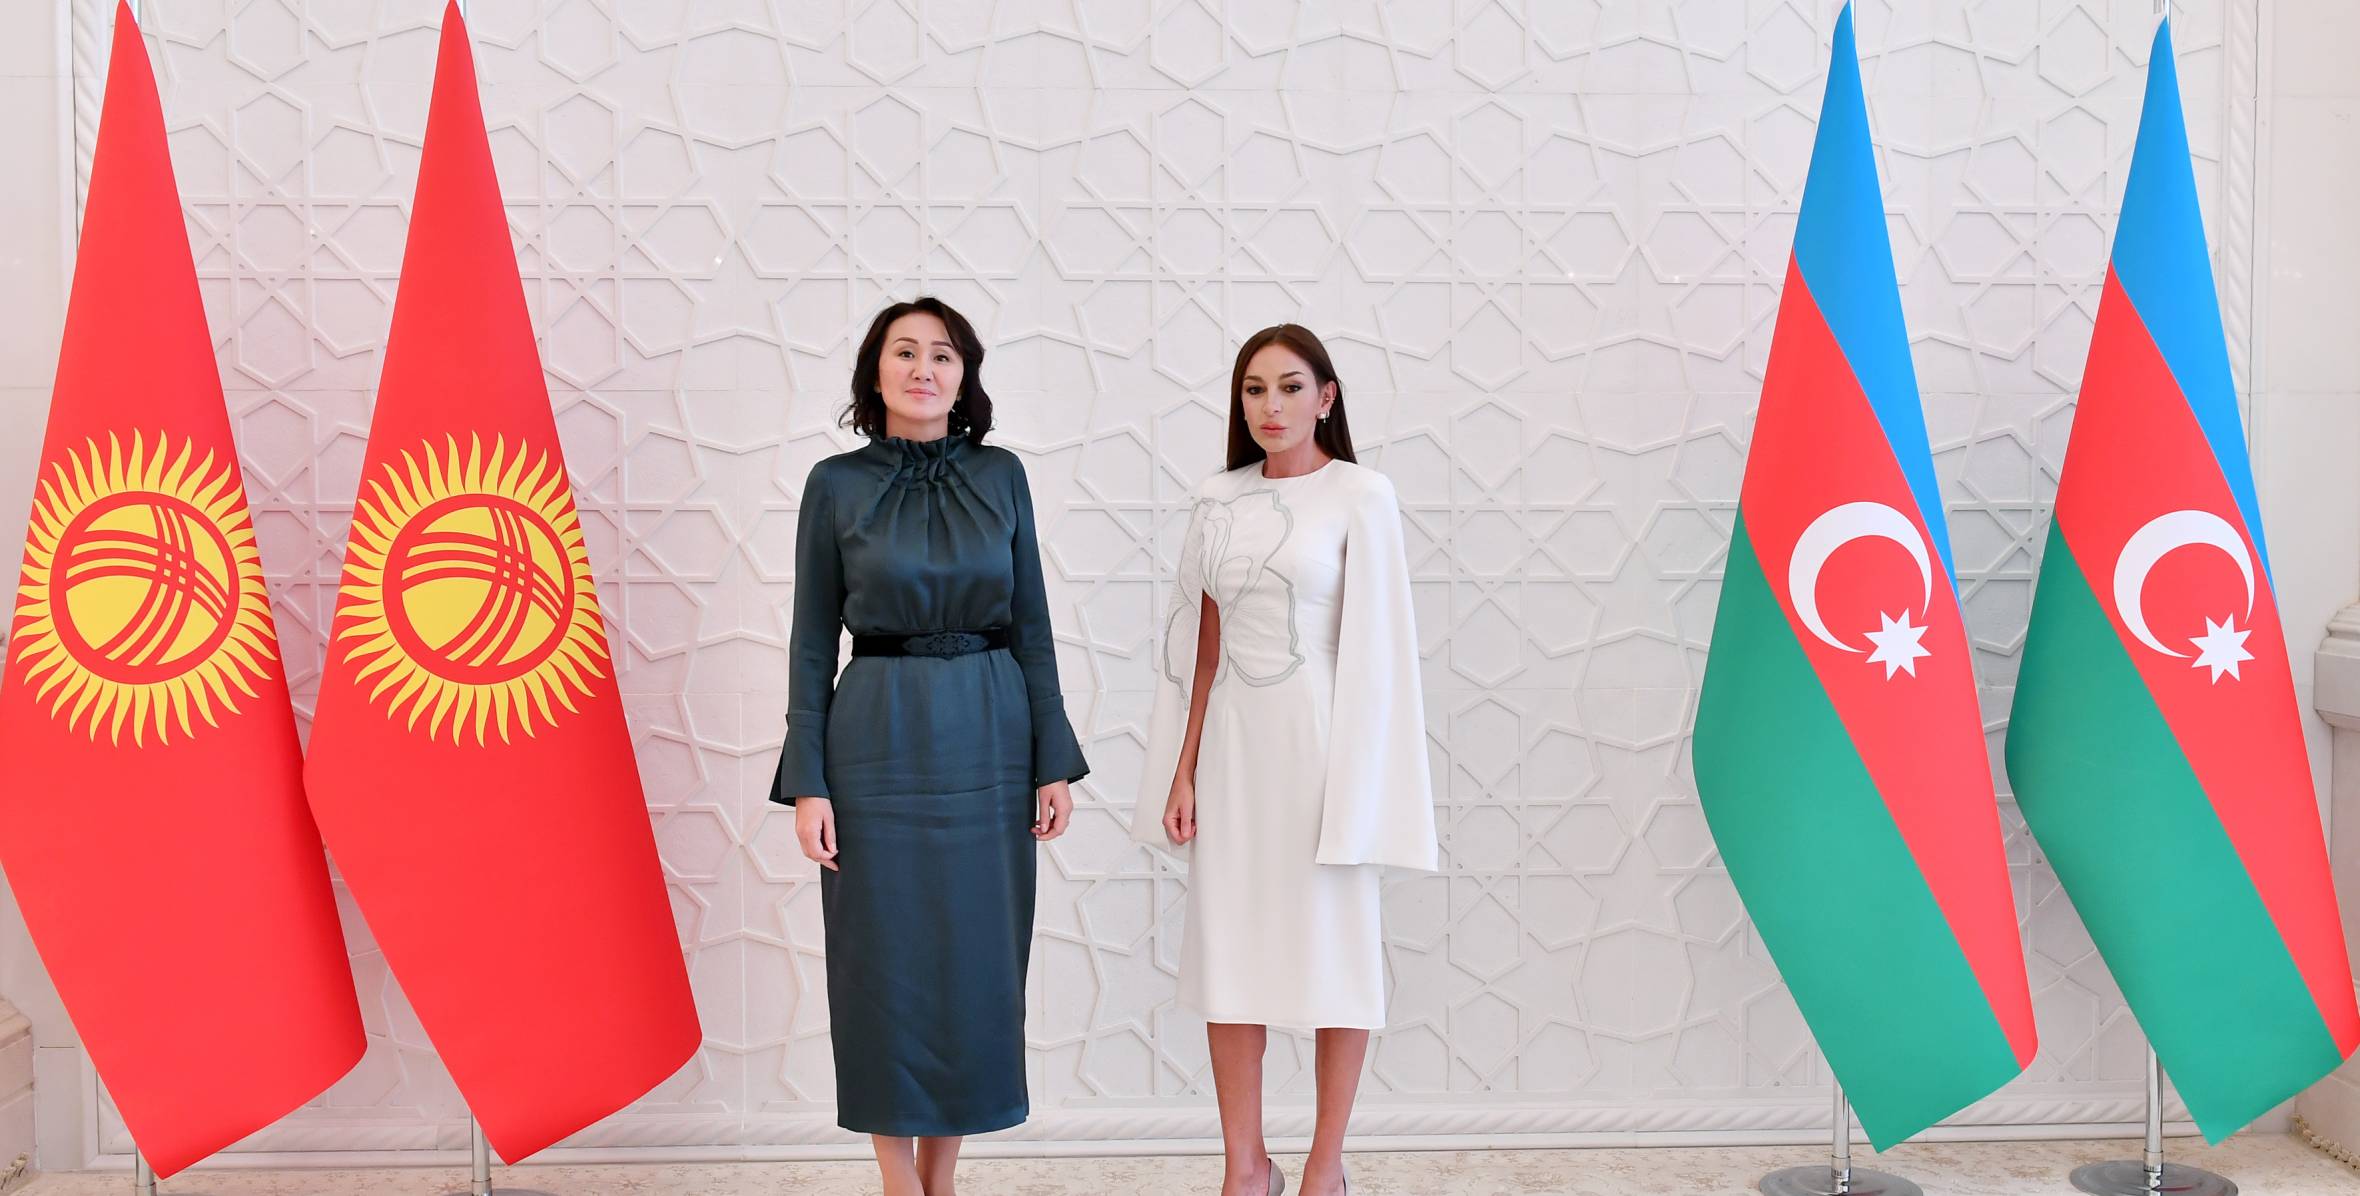 The First Ladies of Azerbaijan and Kyrgyzstan met